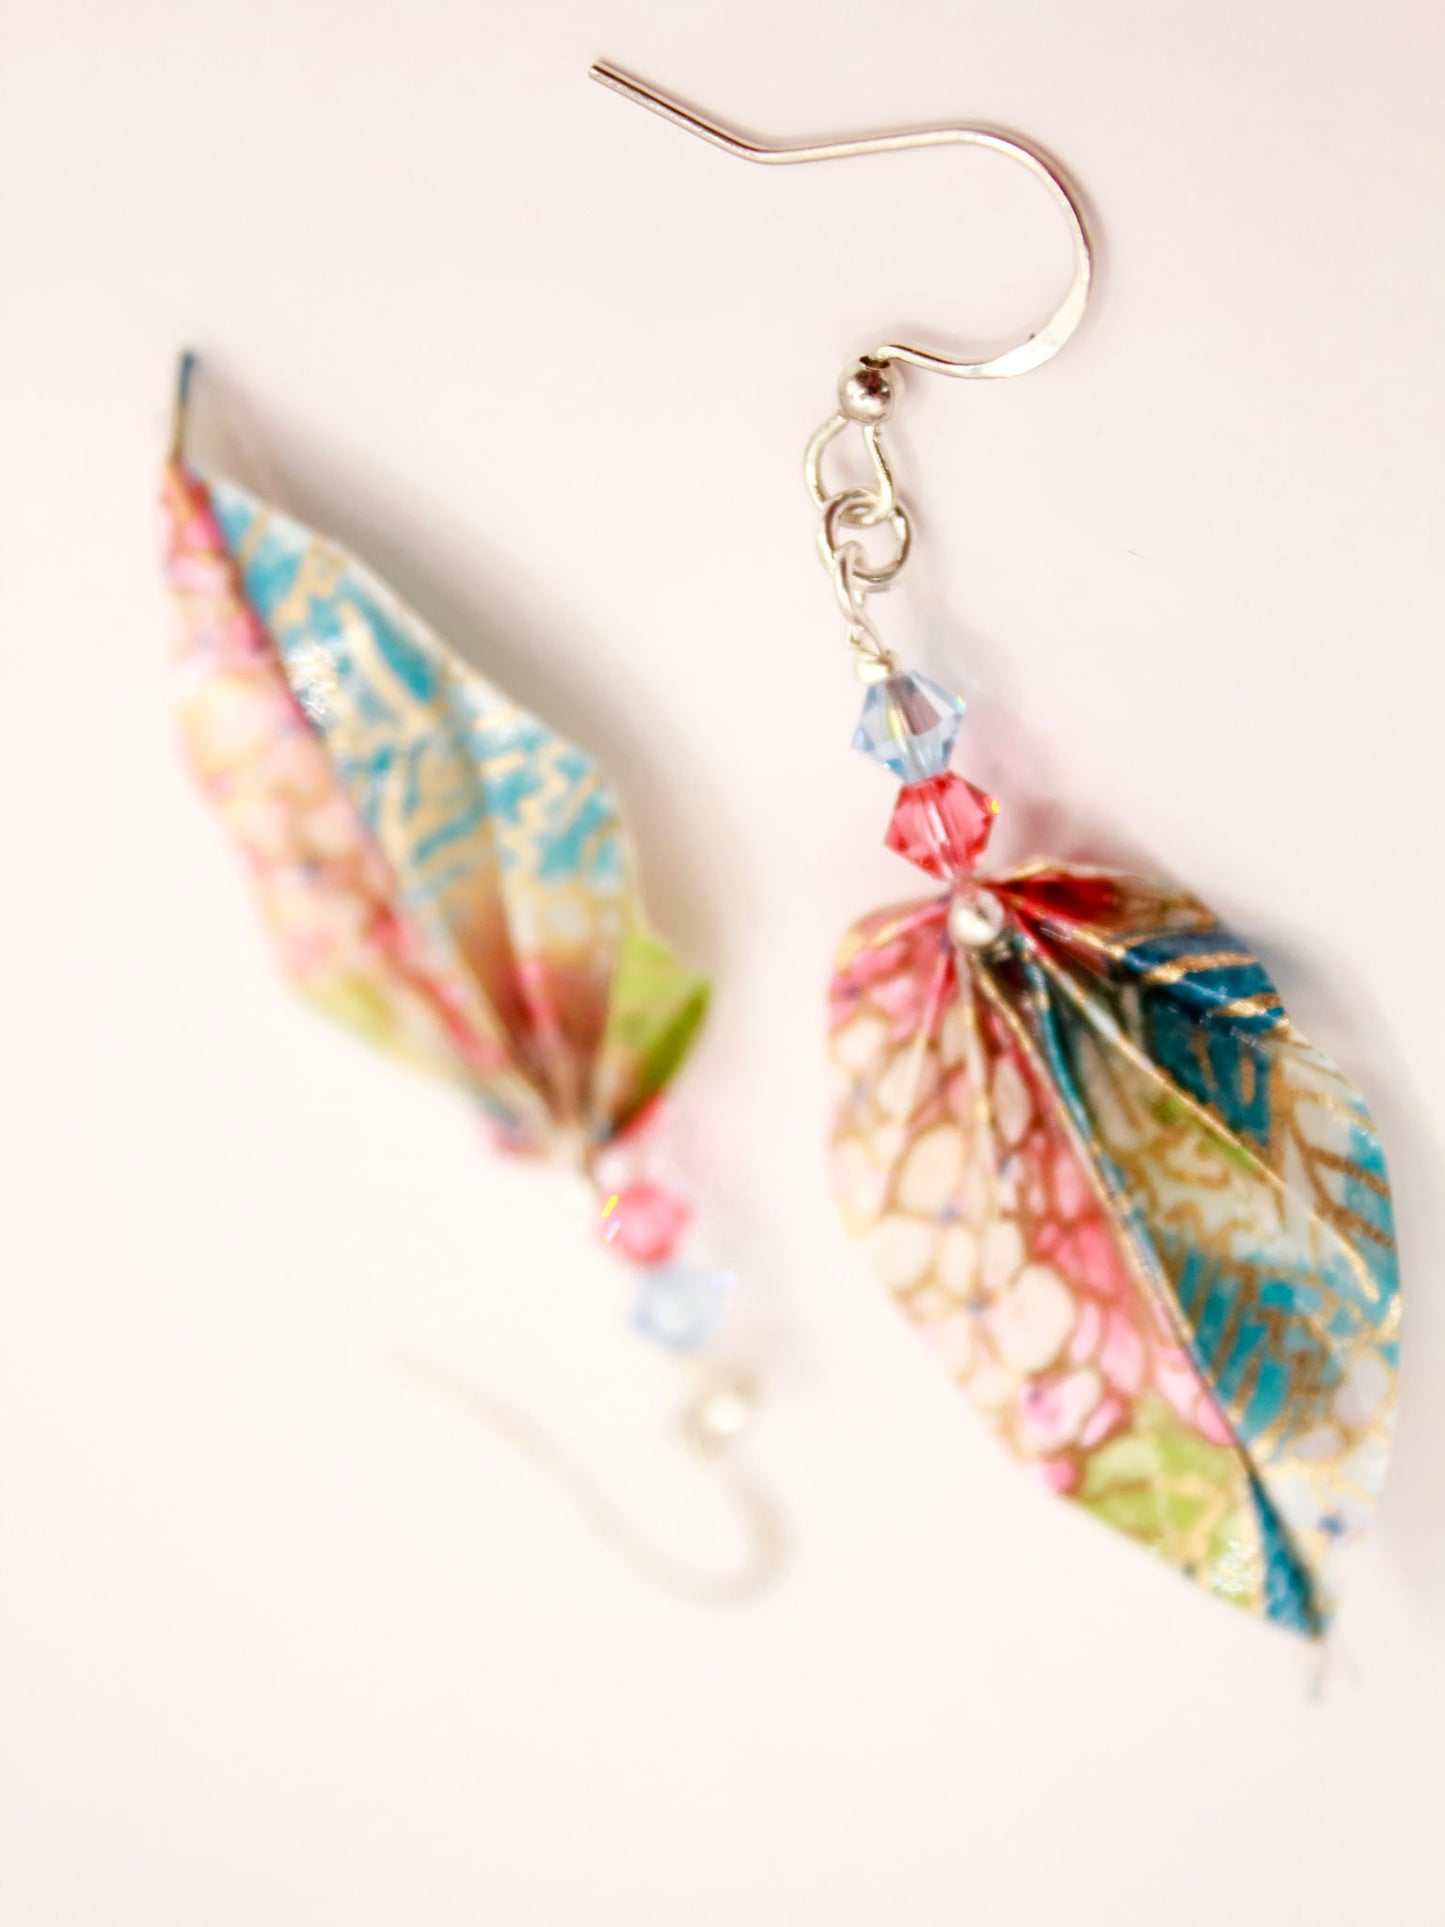 Origami Earrings - Nature's Leafy Elegance